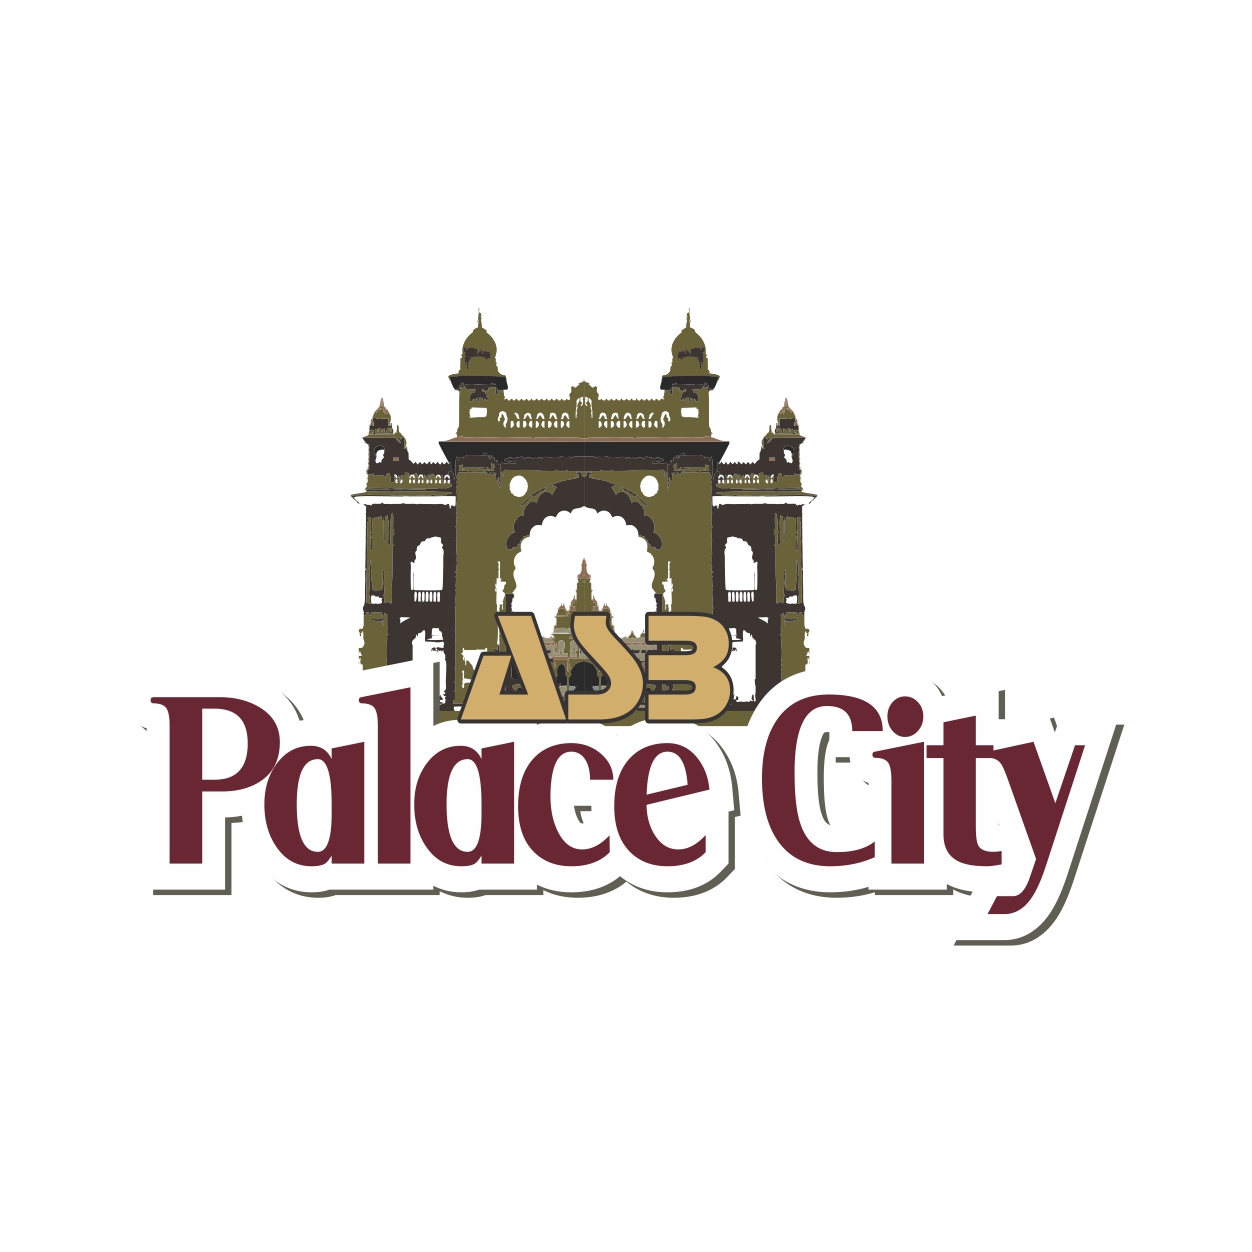 Palace City